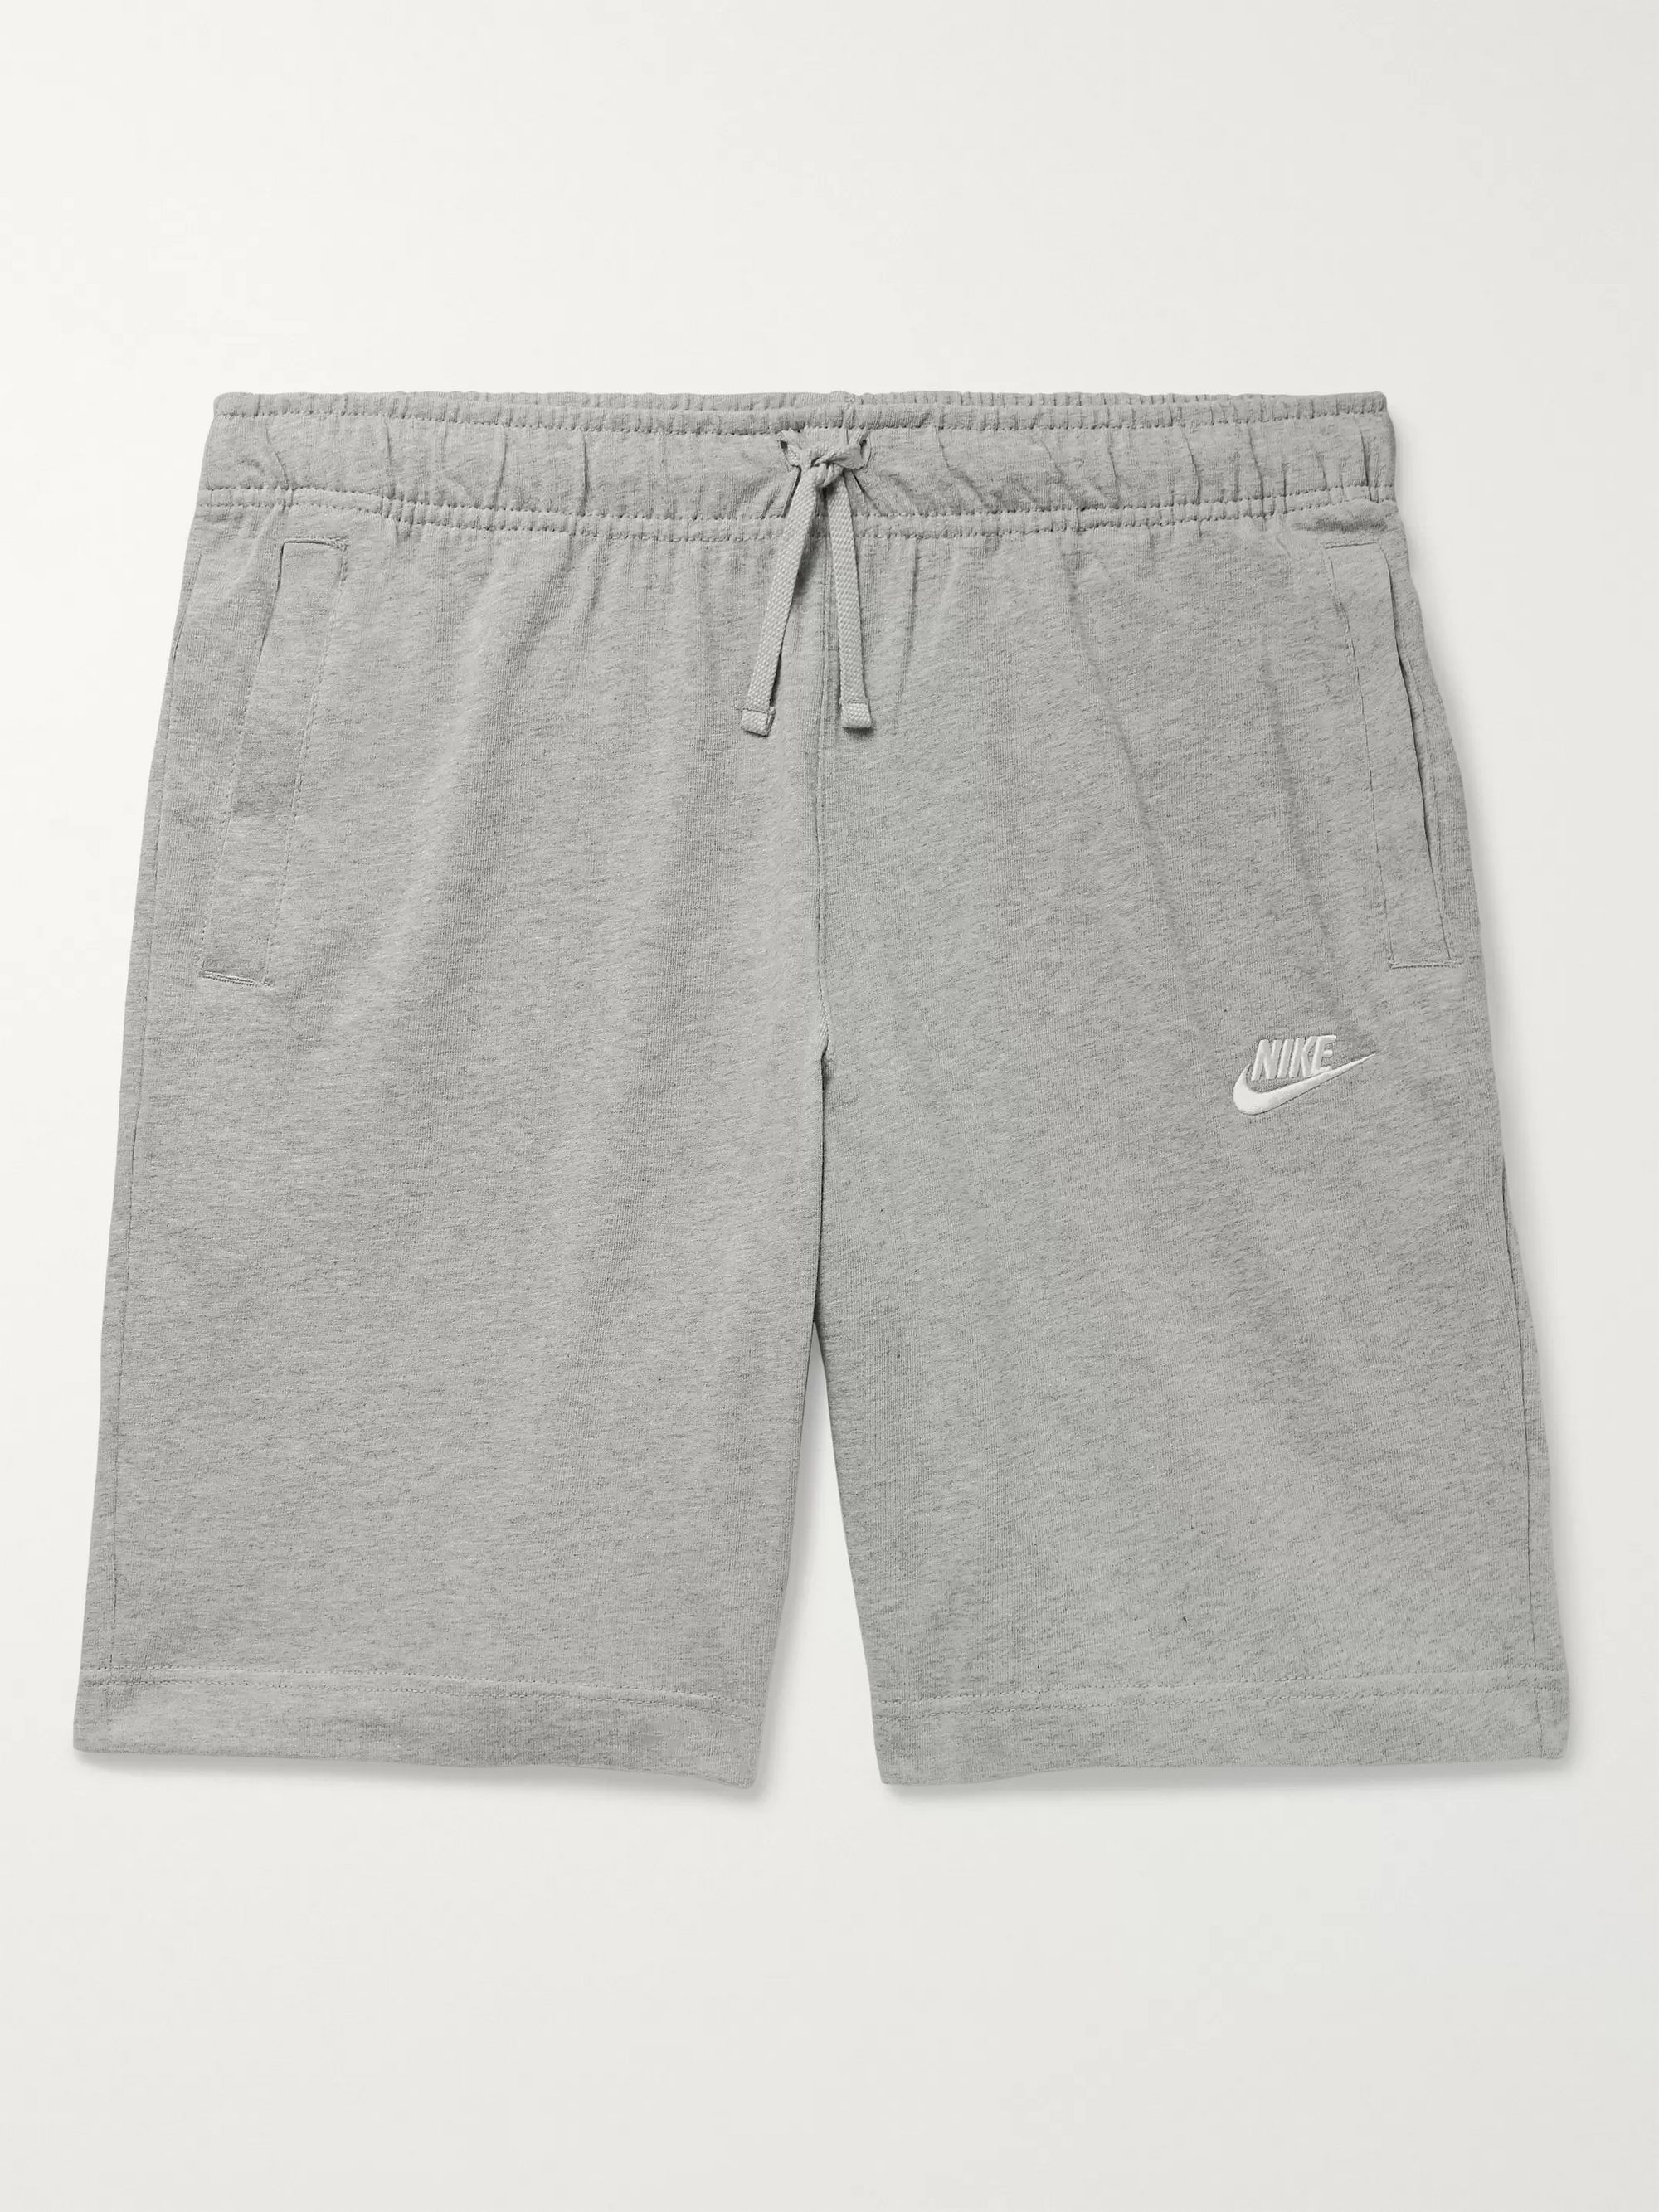 nike cotton grey shorts